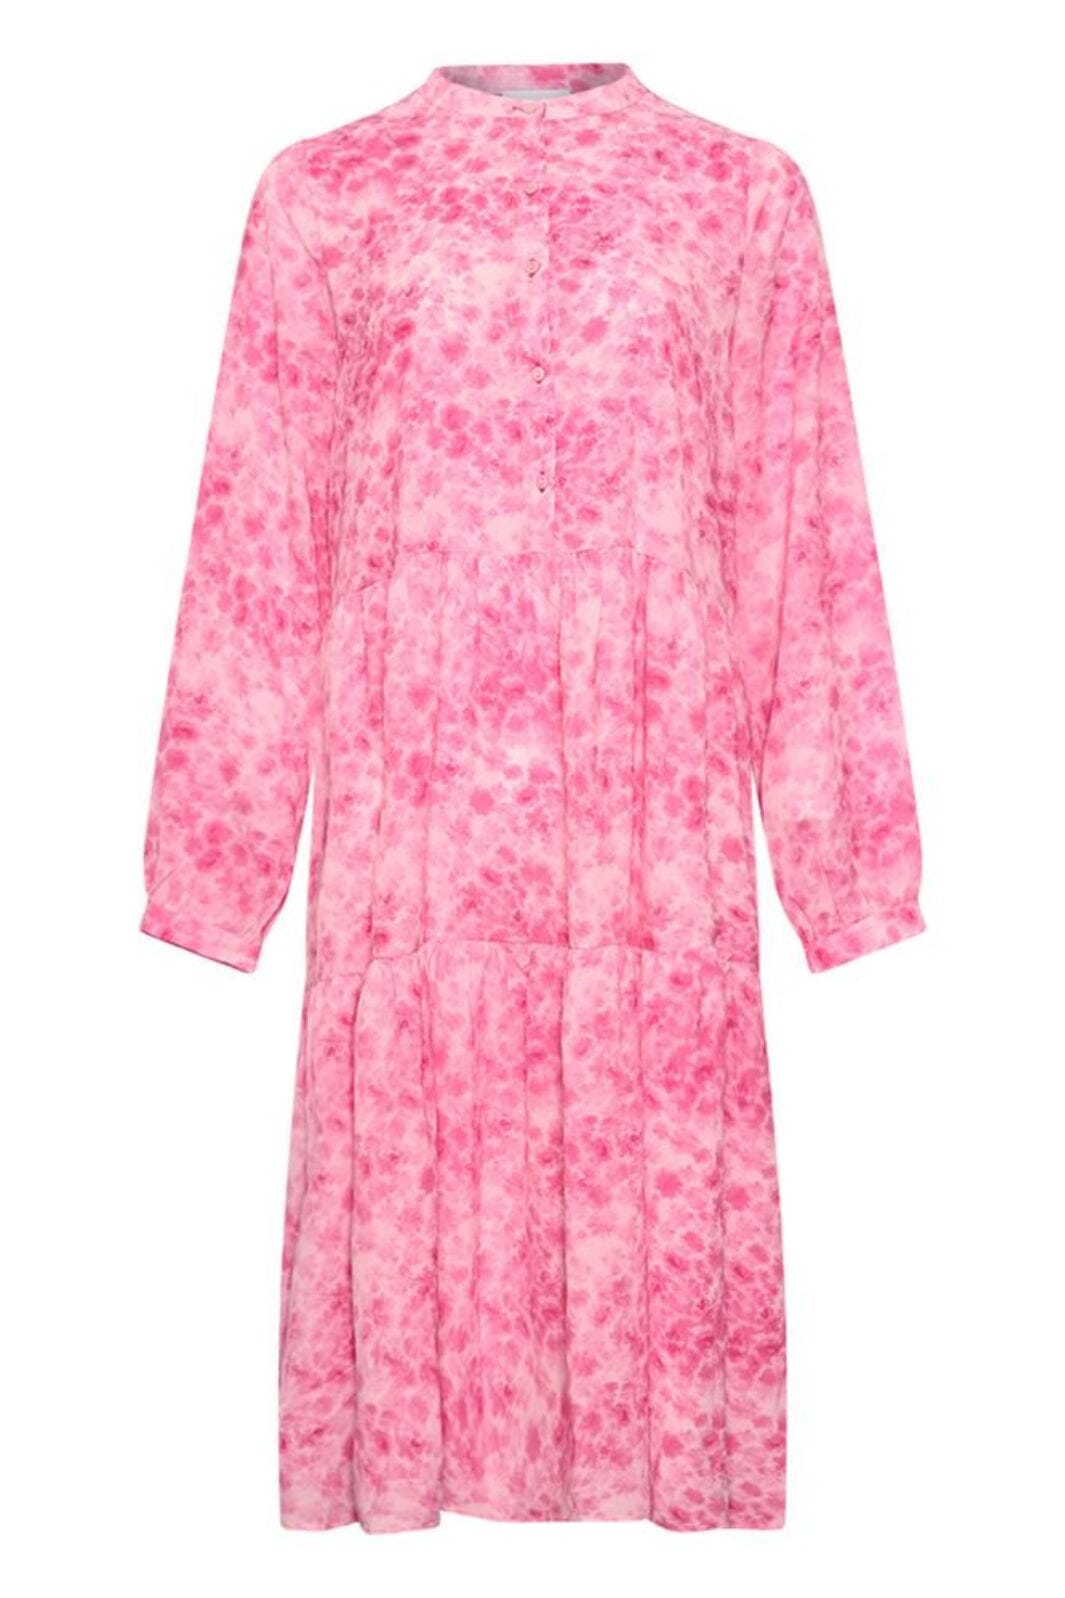 Noella - Lipe Dress - 1057 Trudy Pink Print Kjoler 